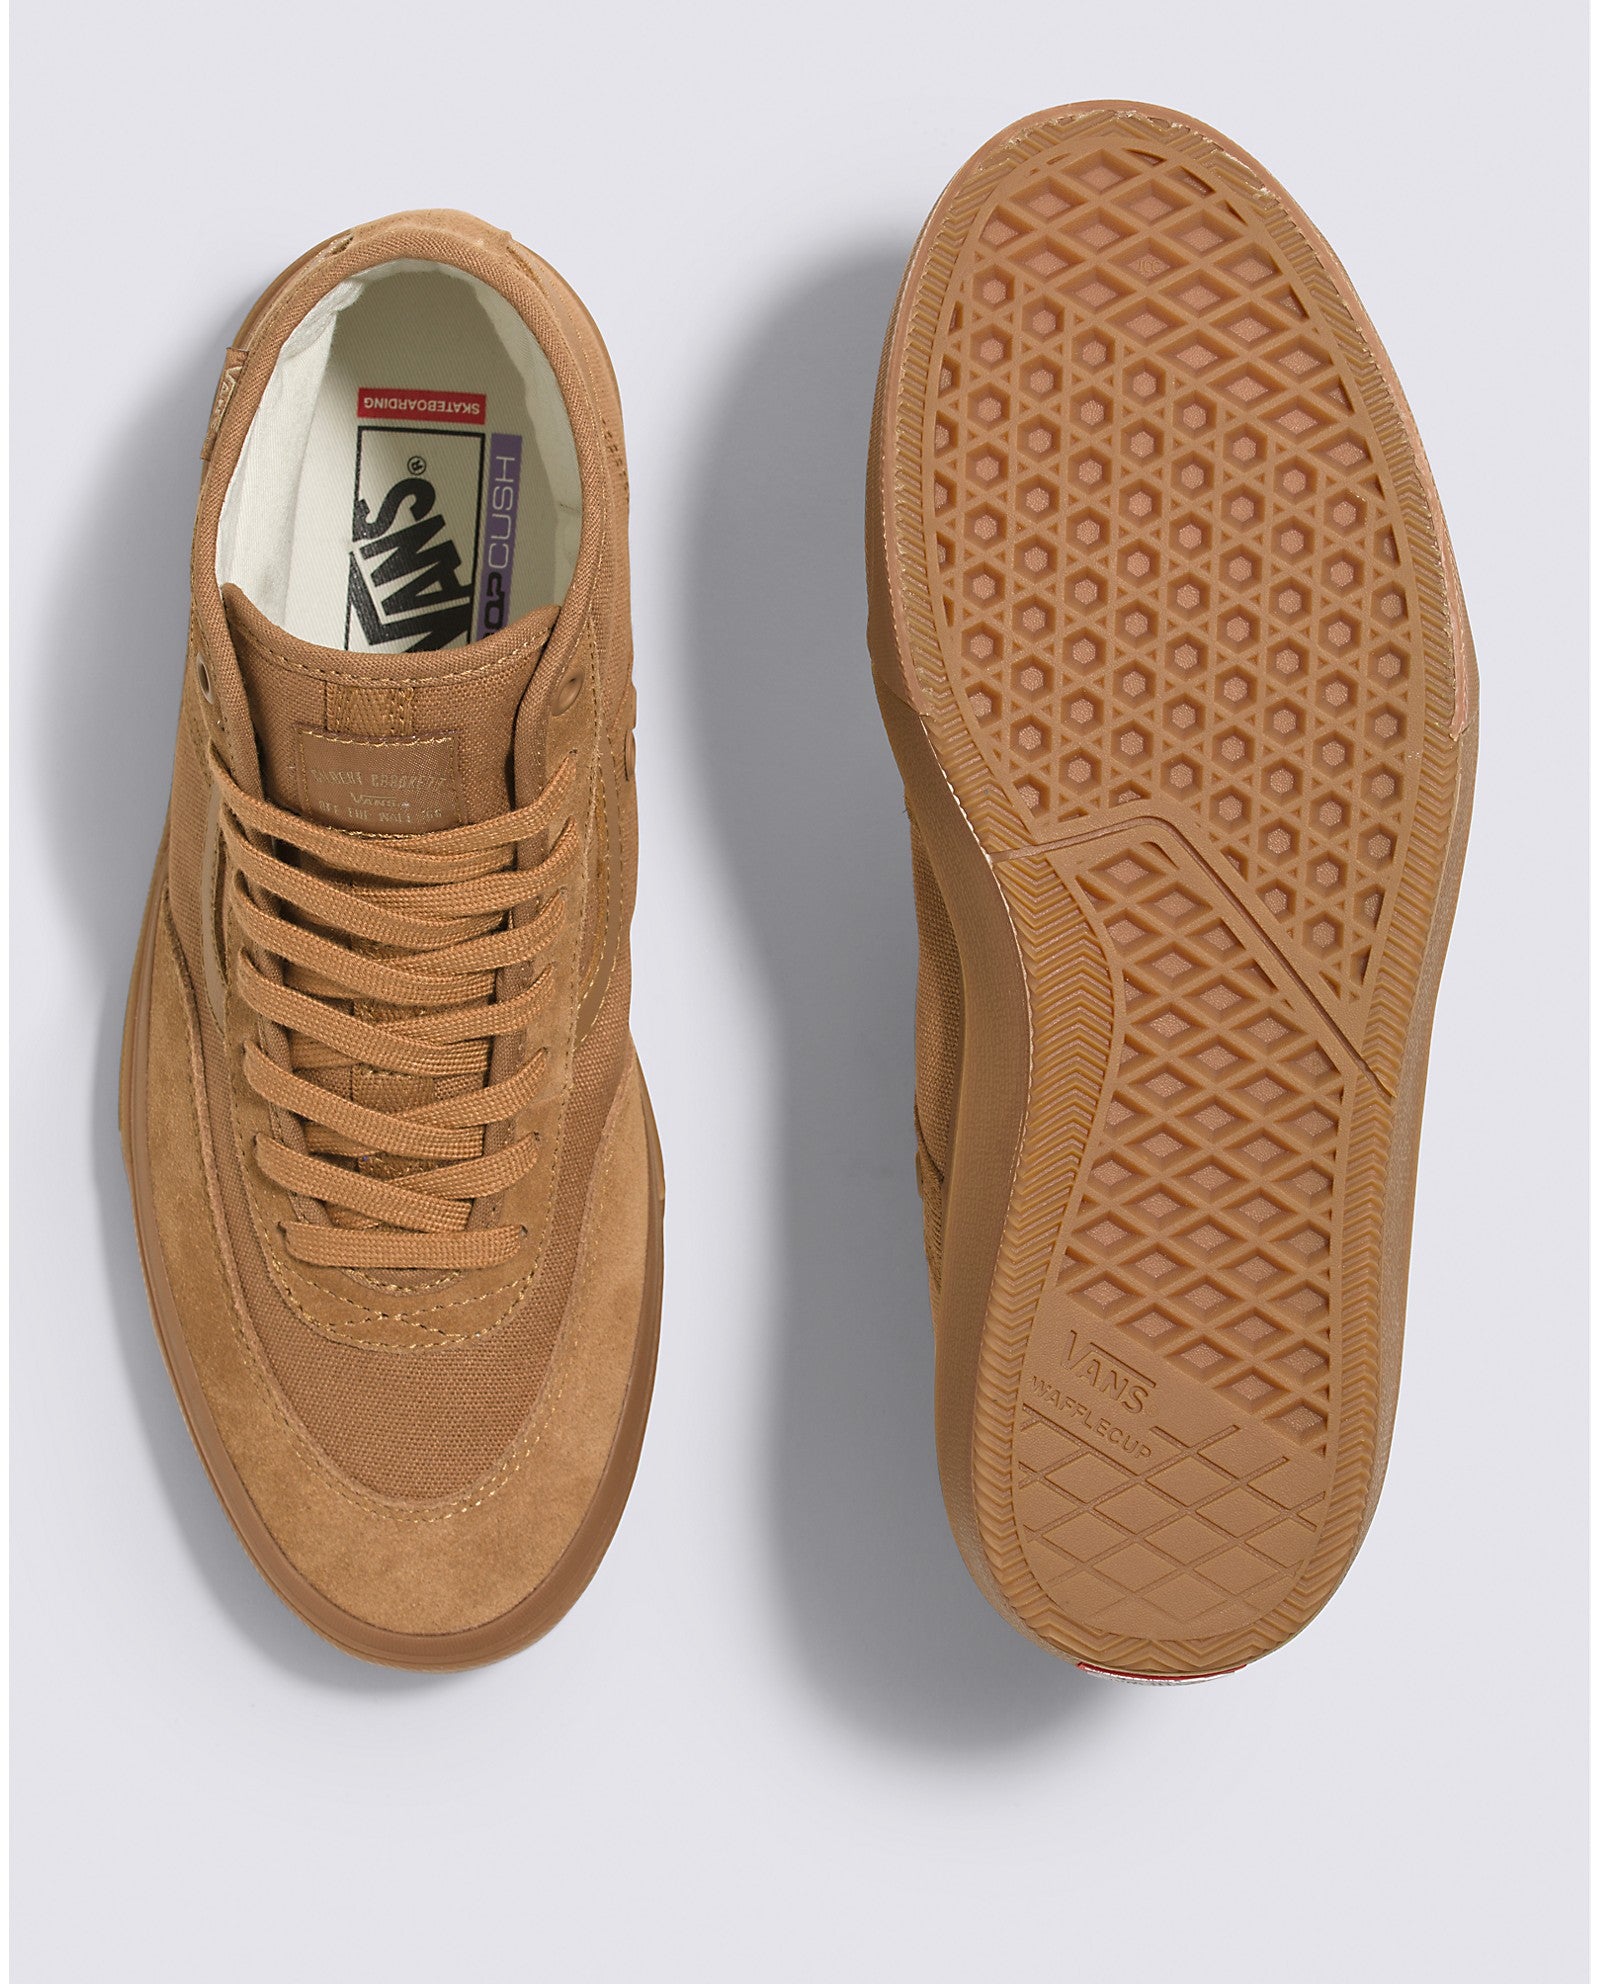 Brown/Gum Crockett High Vans Skate Shoe Top/Bottom